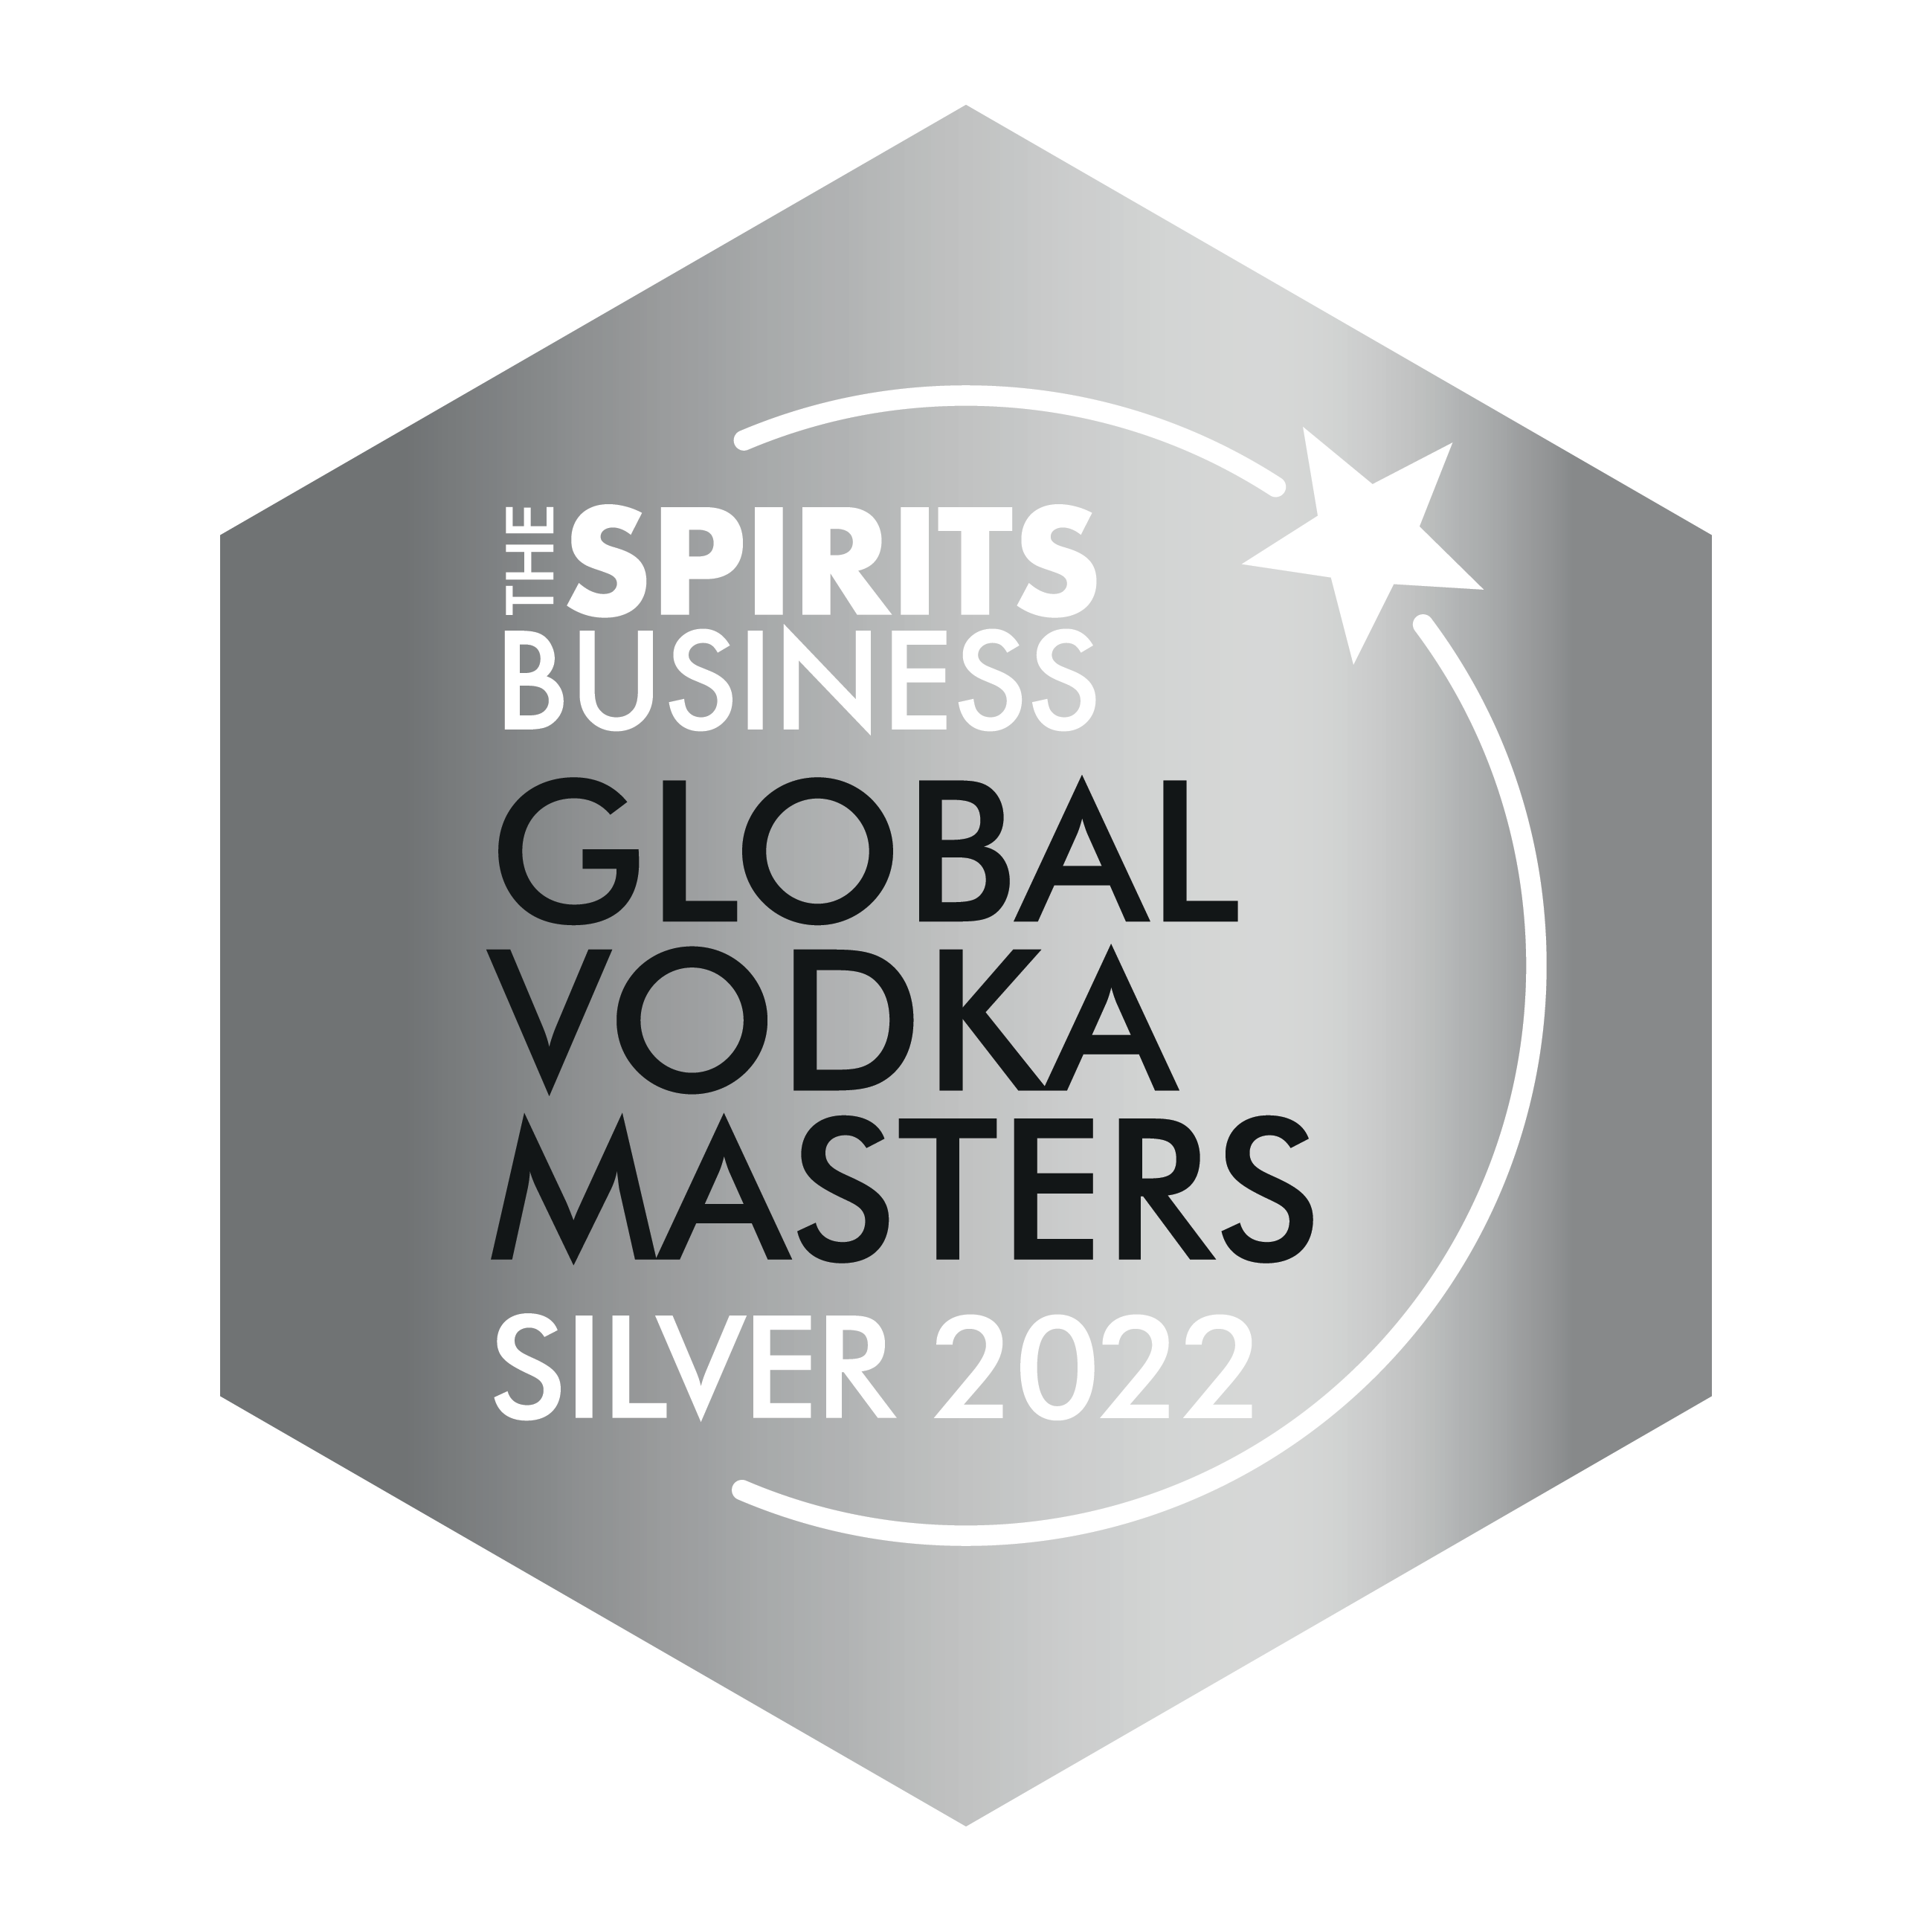 Vodka Masters 2022 - Silver Award